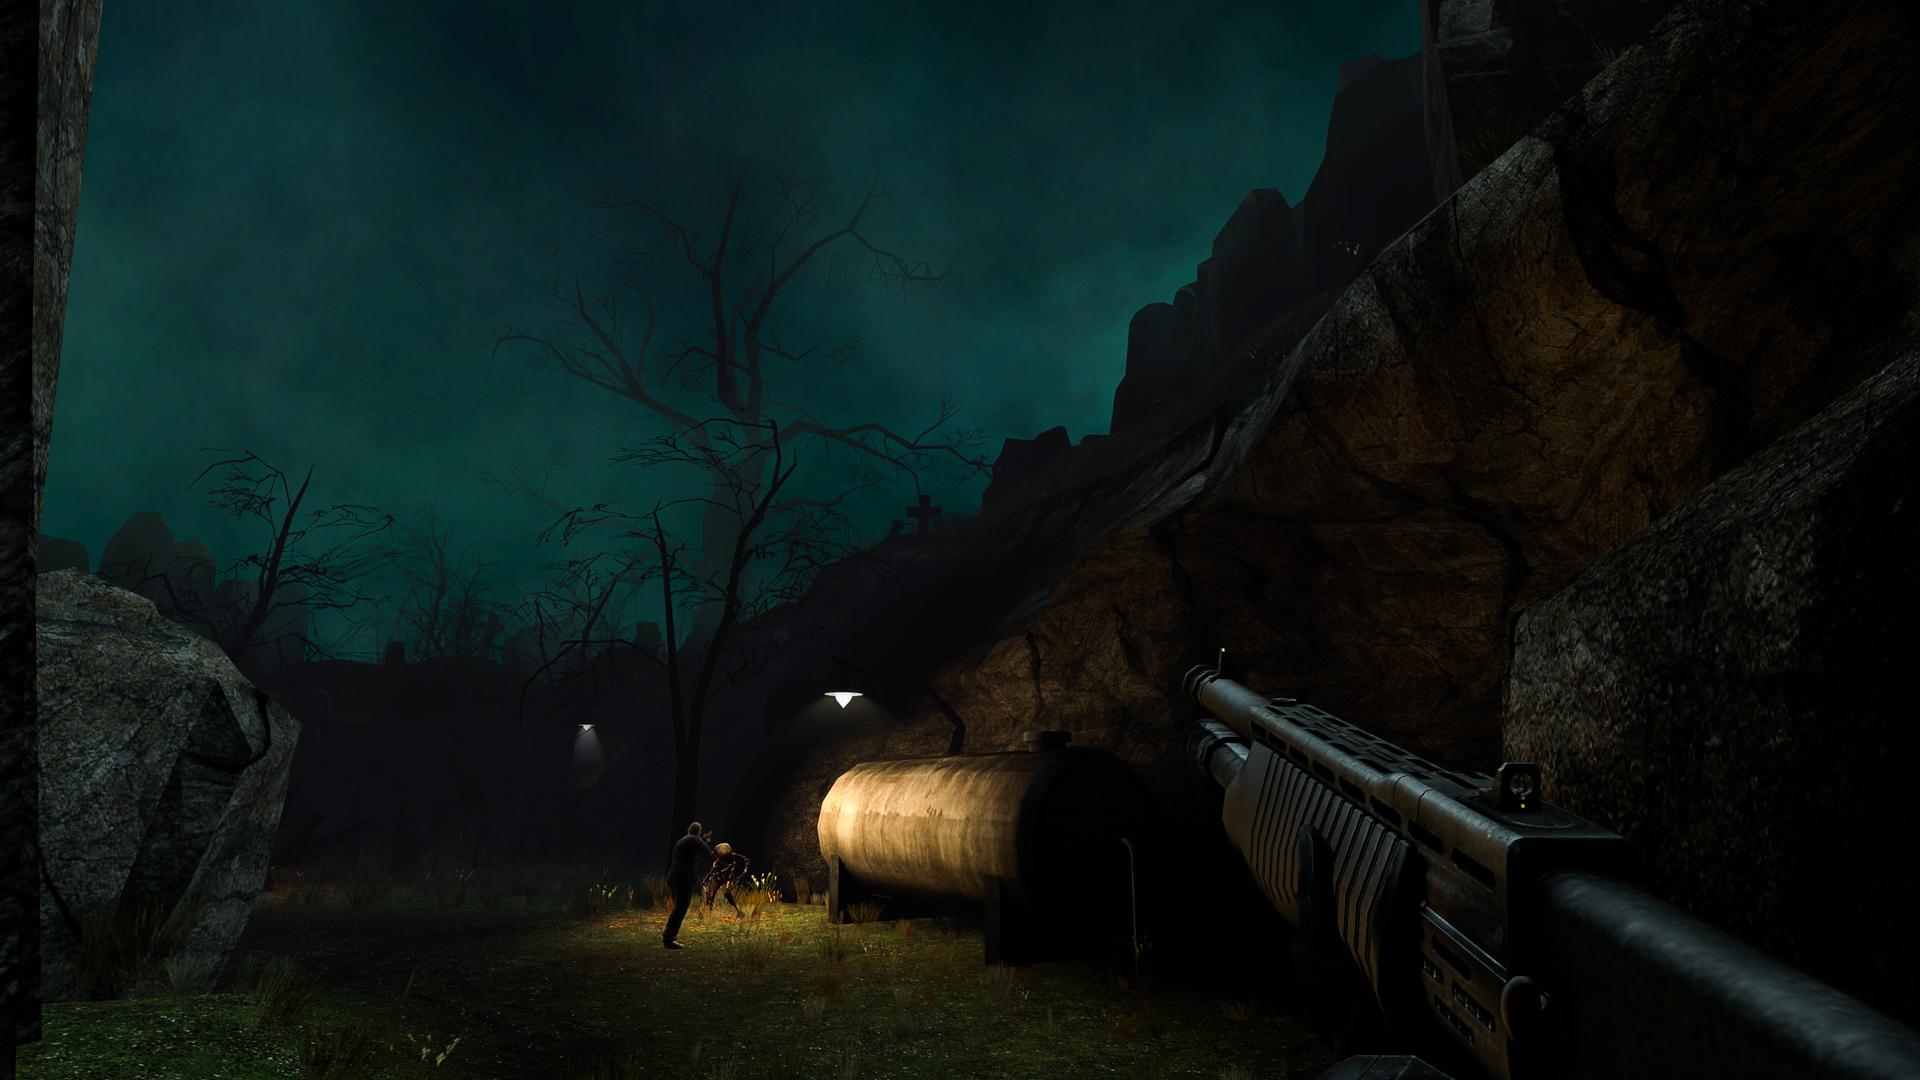 Screenshot №2 from game Half-Life 2: Update